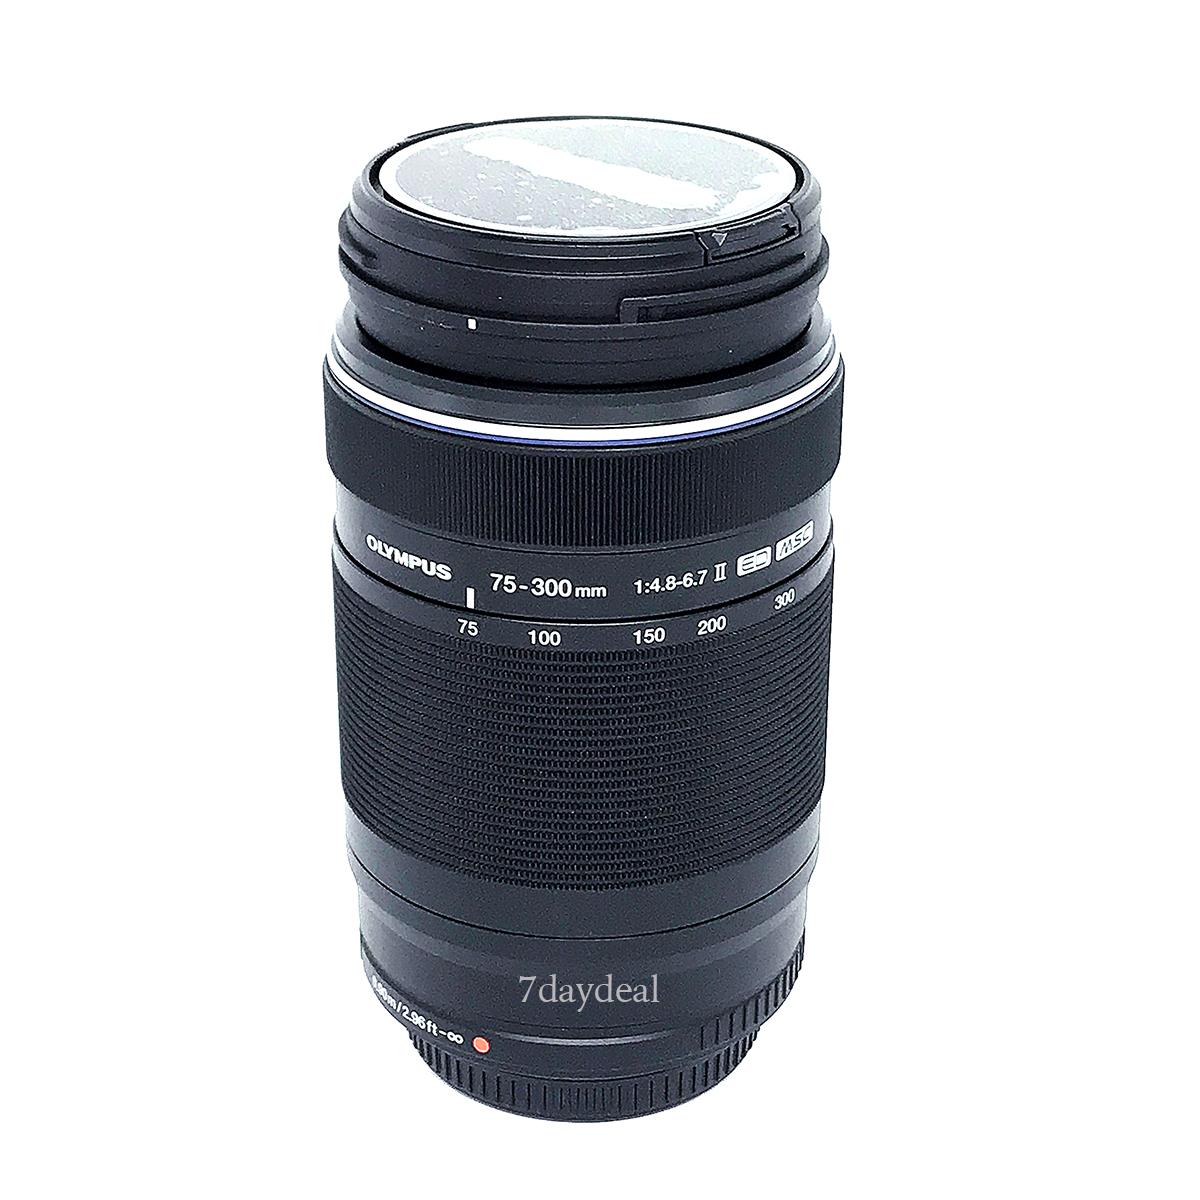 Olympus 75-300mm f4.8-6.7 II M.ZUIKO DIGITAL ED Lens (75-300 f/4.8